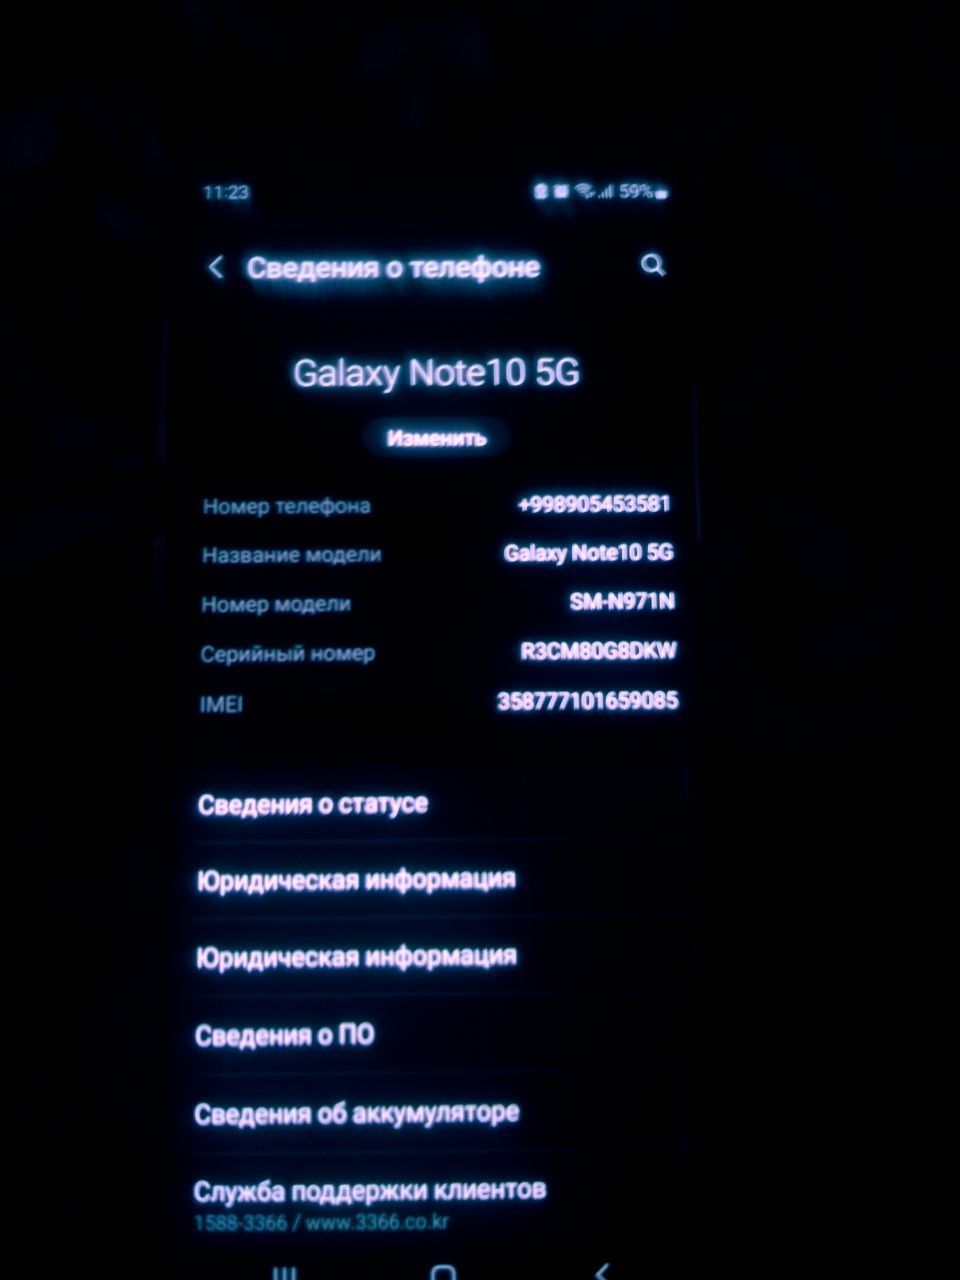 Samsung not 10 5G